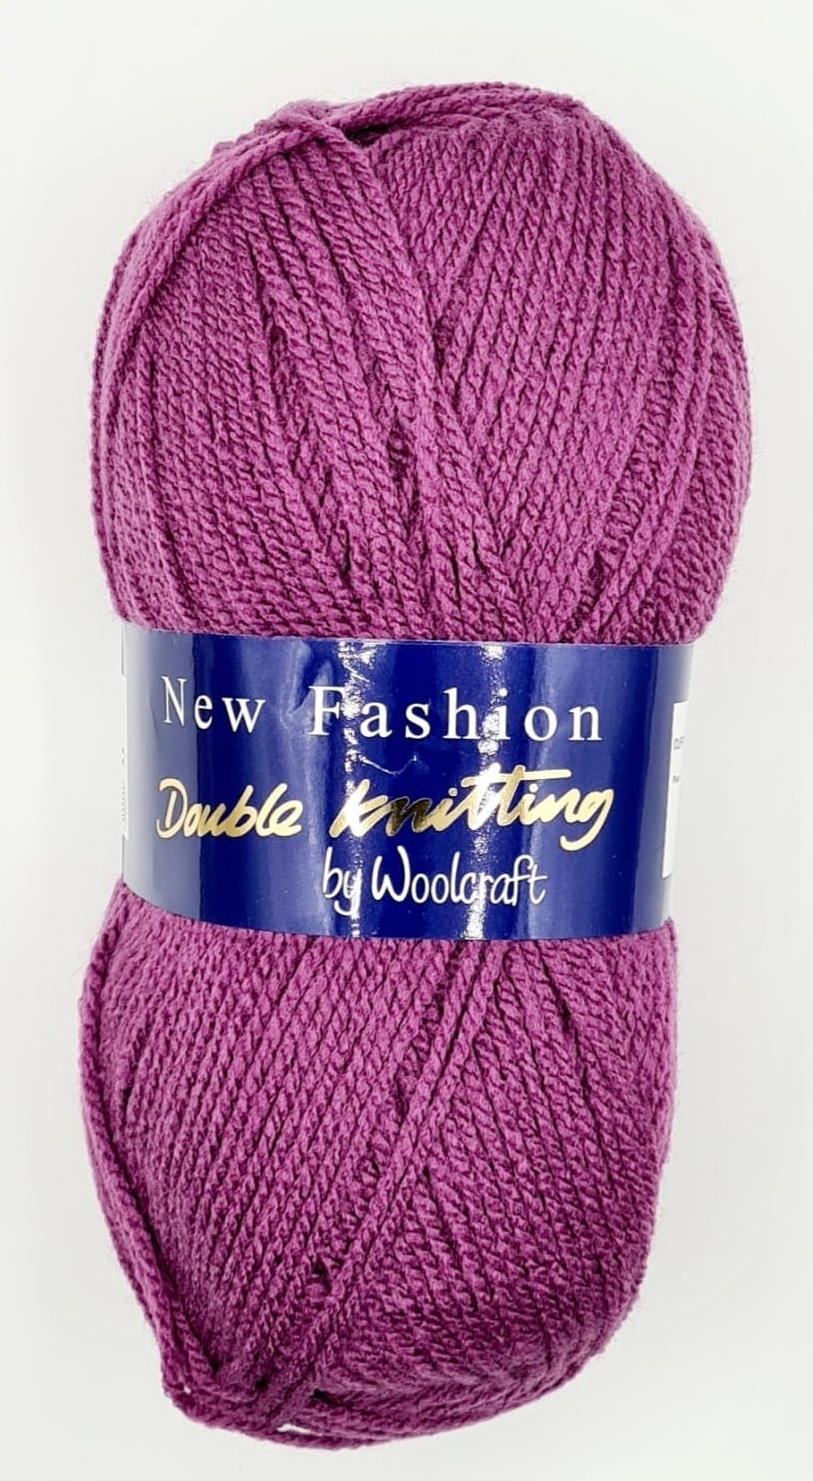 New Fashion DK Yarn 10 Pack Clover 1558